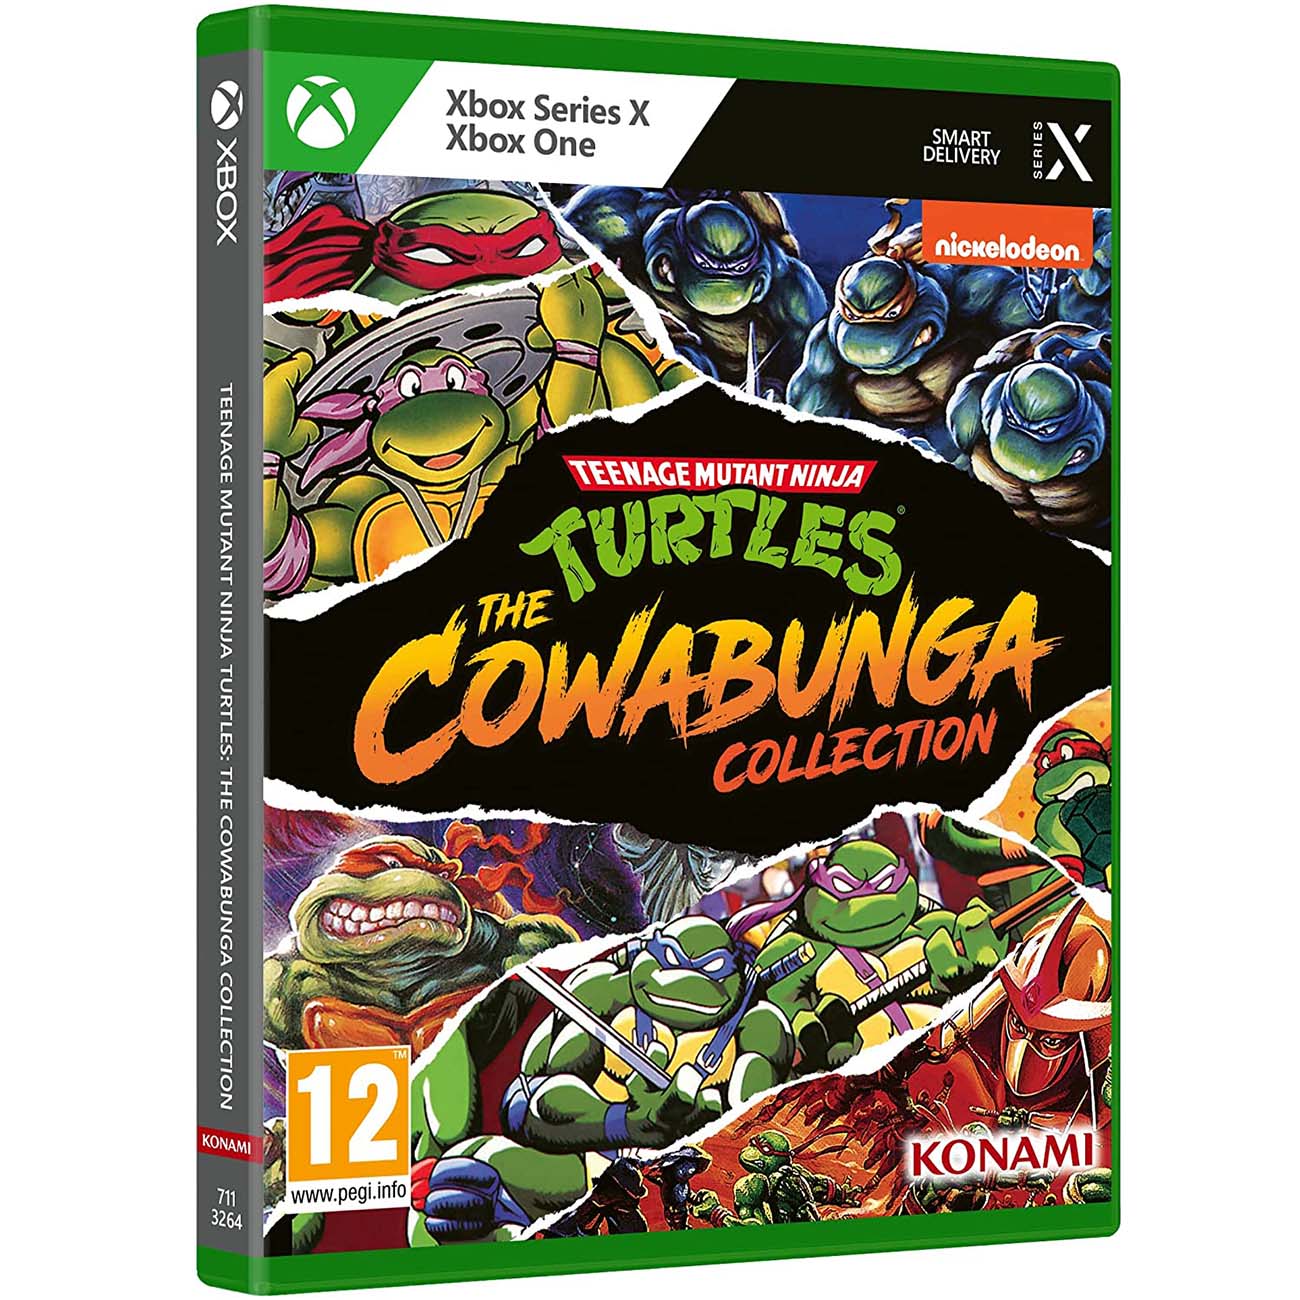 Mutant ninja turtles cowabunga collection. TMNT Cowabunga collection Xbox. Teenage Mutant Ninja Turtles: the Cowabunga collection. Teenage Mutant Ninja Turtles ps4. Konami Xbox 360.